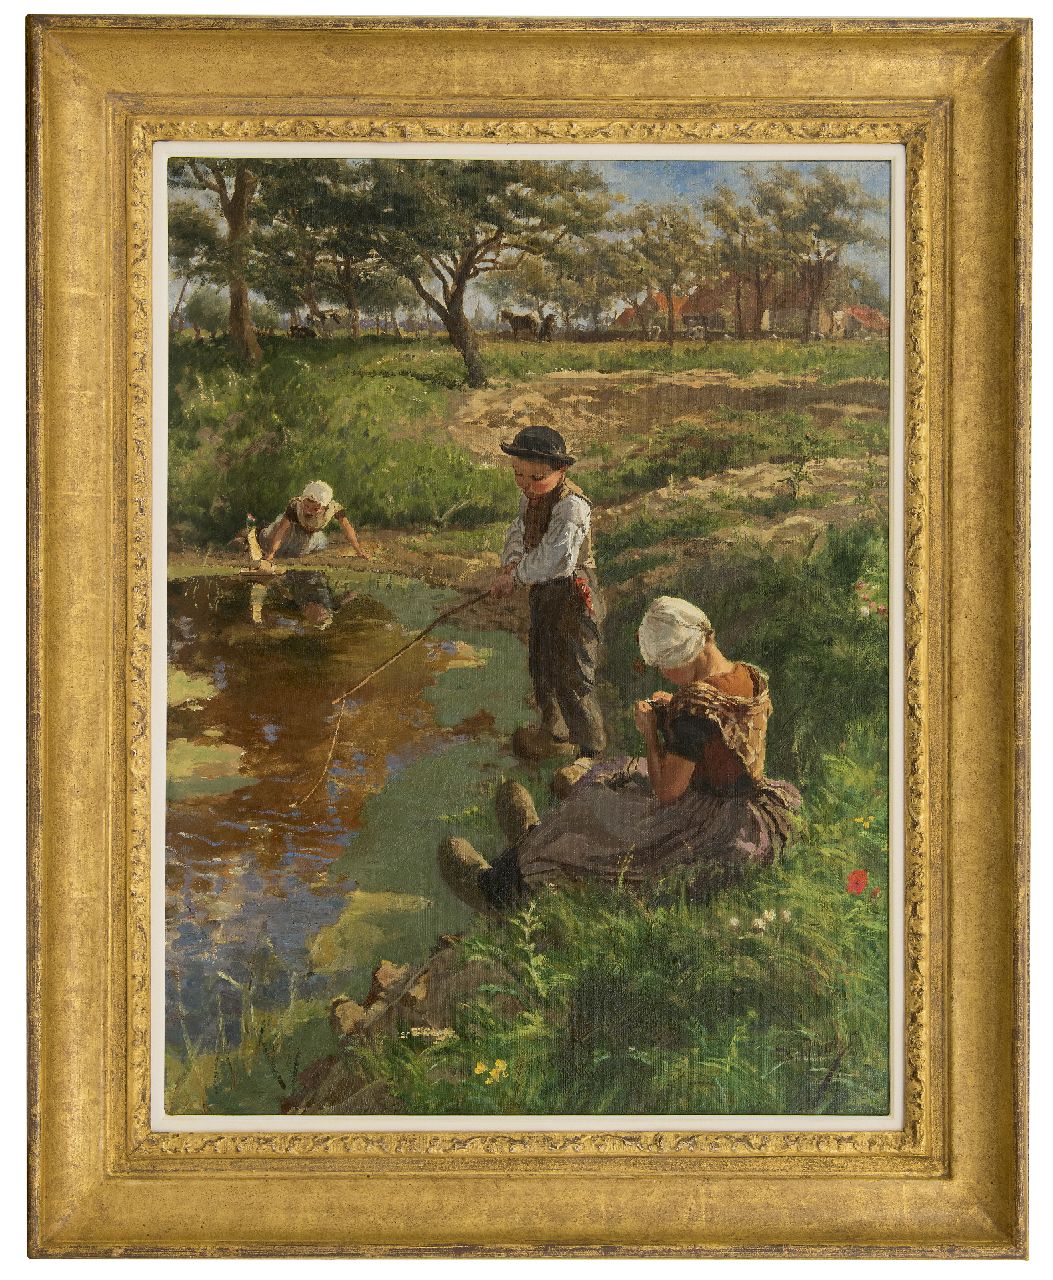 Horrix H.M.  | Hendrikus Matheus 'Mathieu' Horrix | Paintings offered for sale | The young fisherman, Zeeland, oil on canvas 75.8 x 58.0 cm, signed l.r.